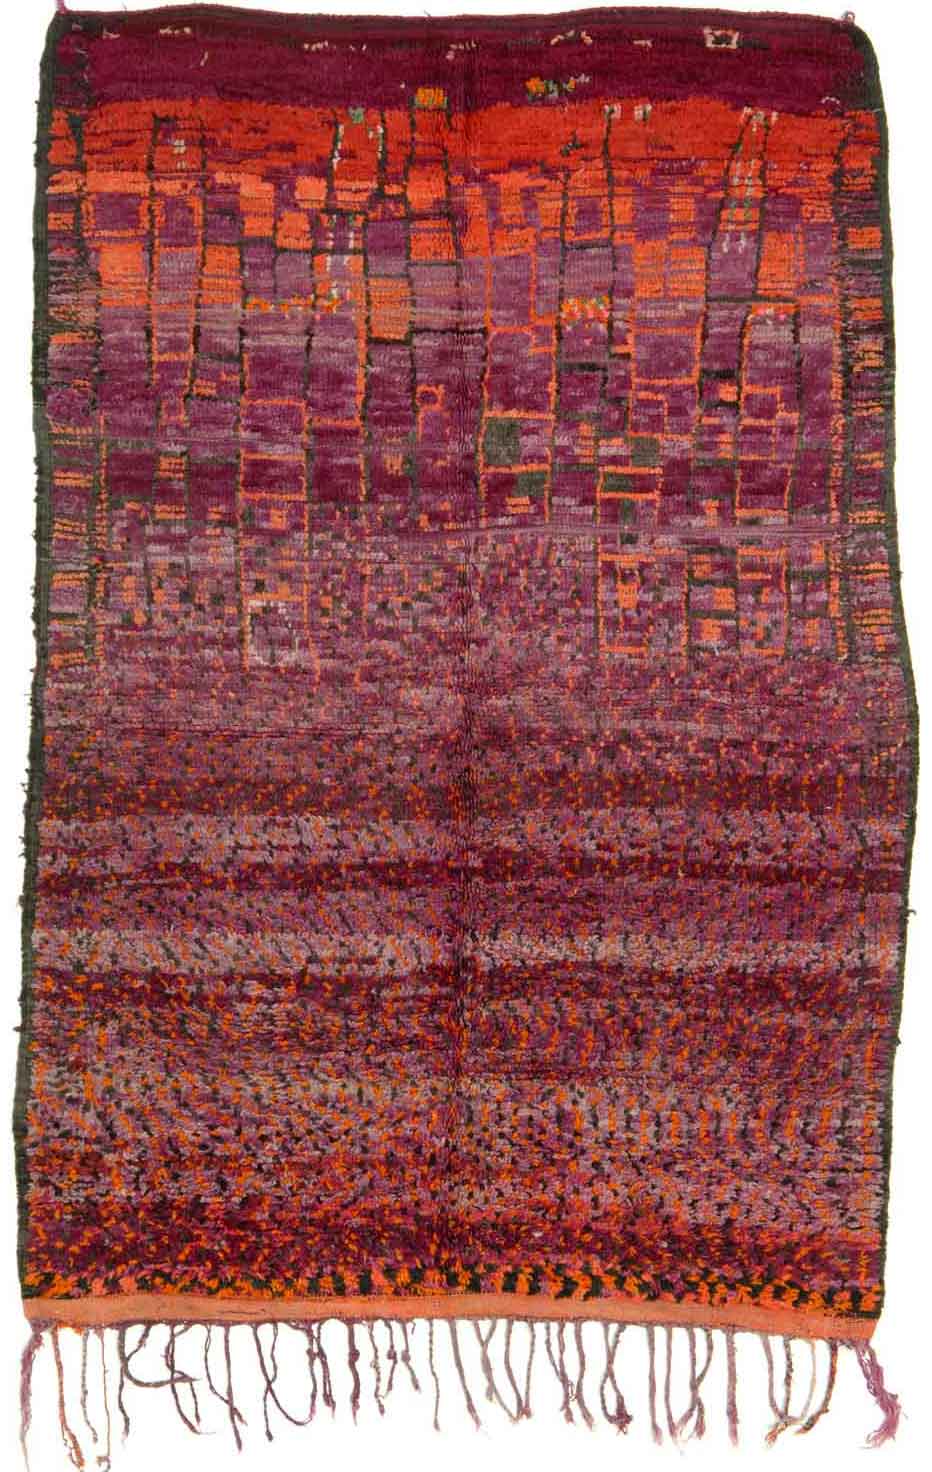 Beni Mguild pile rug, central Middle Atlas, Morocco, 1960. Jürgen Adam Collection at The International Design Museum, Munich 